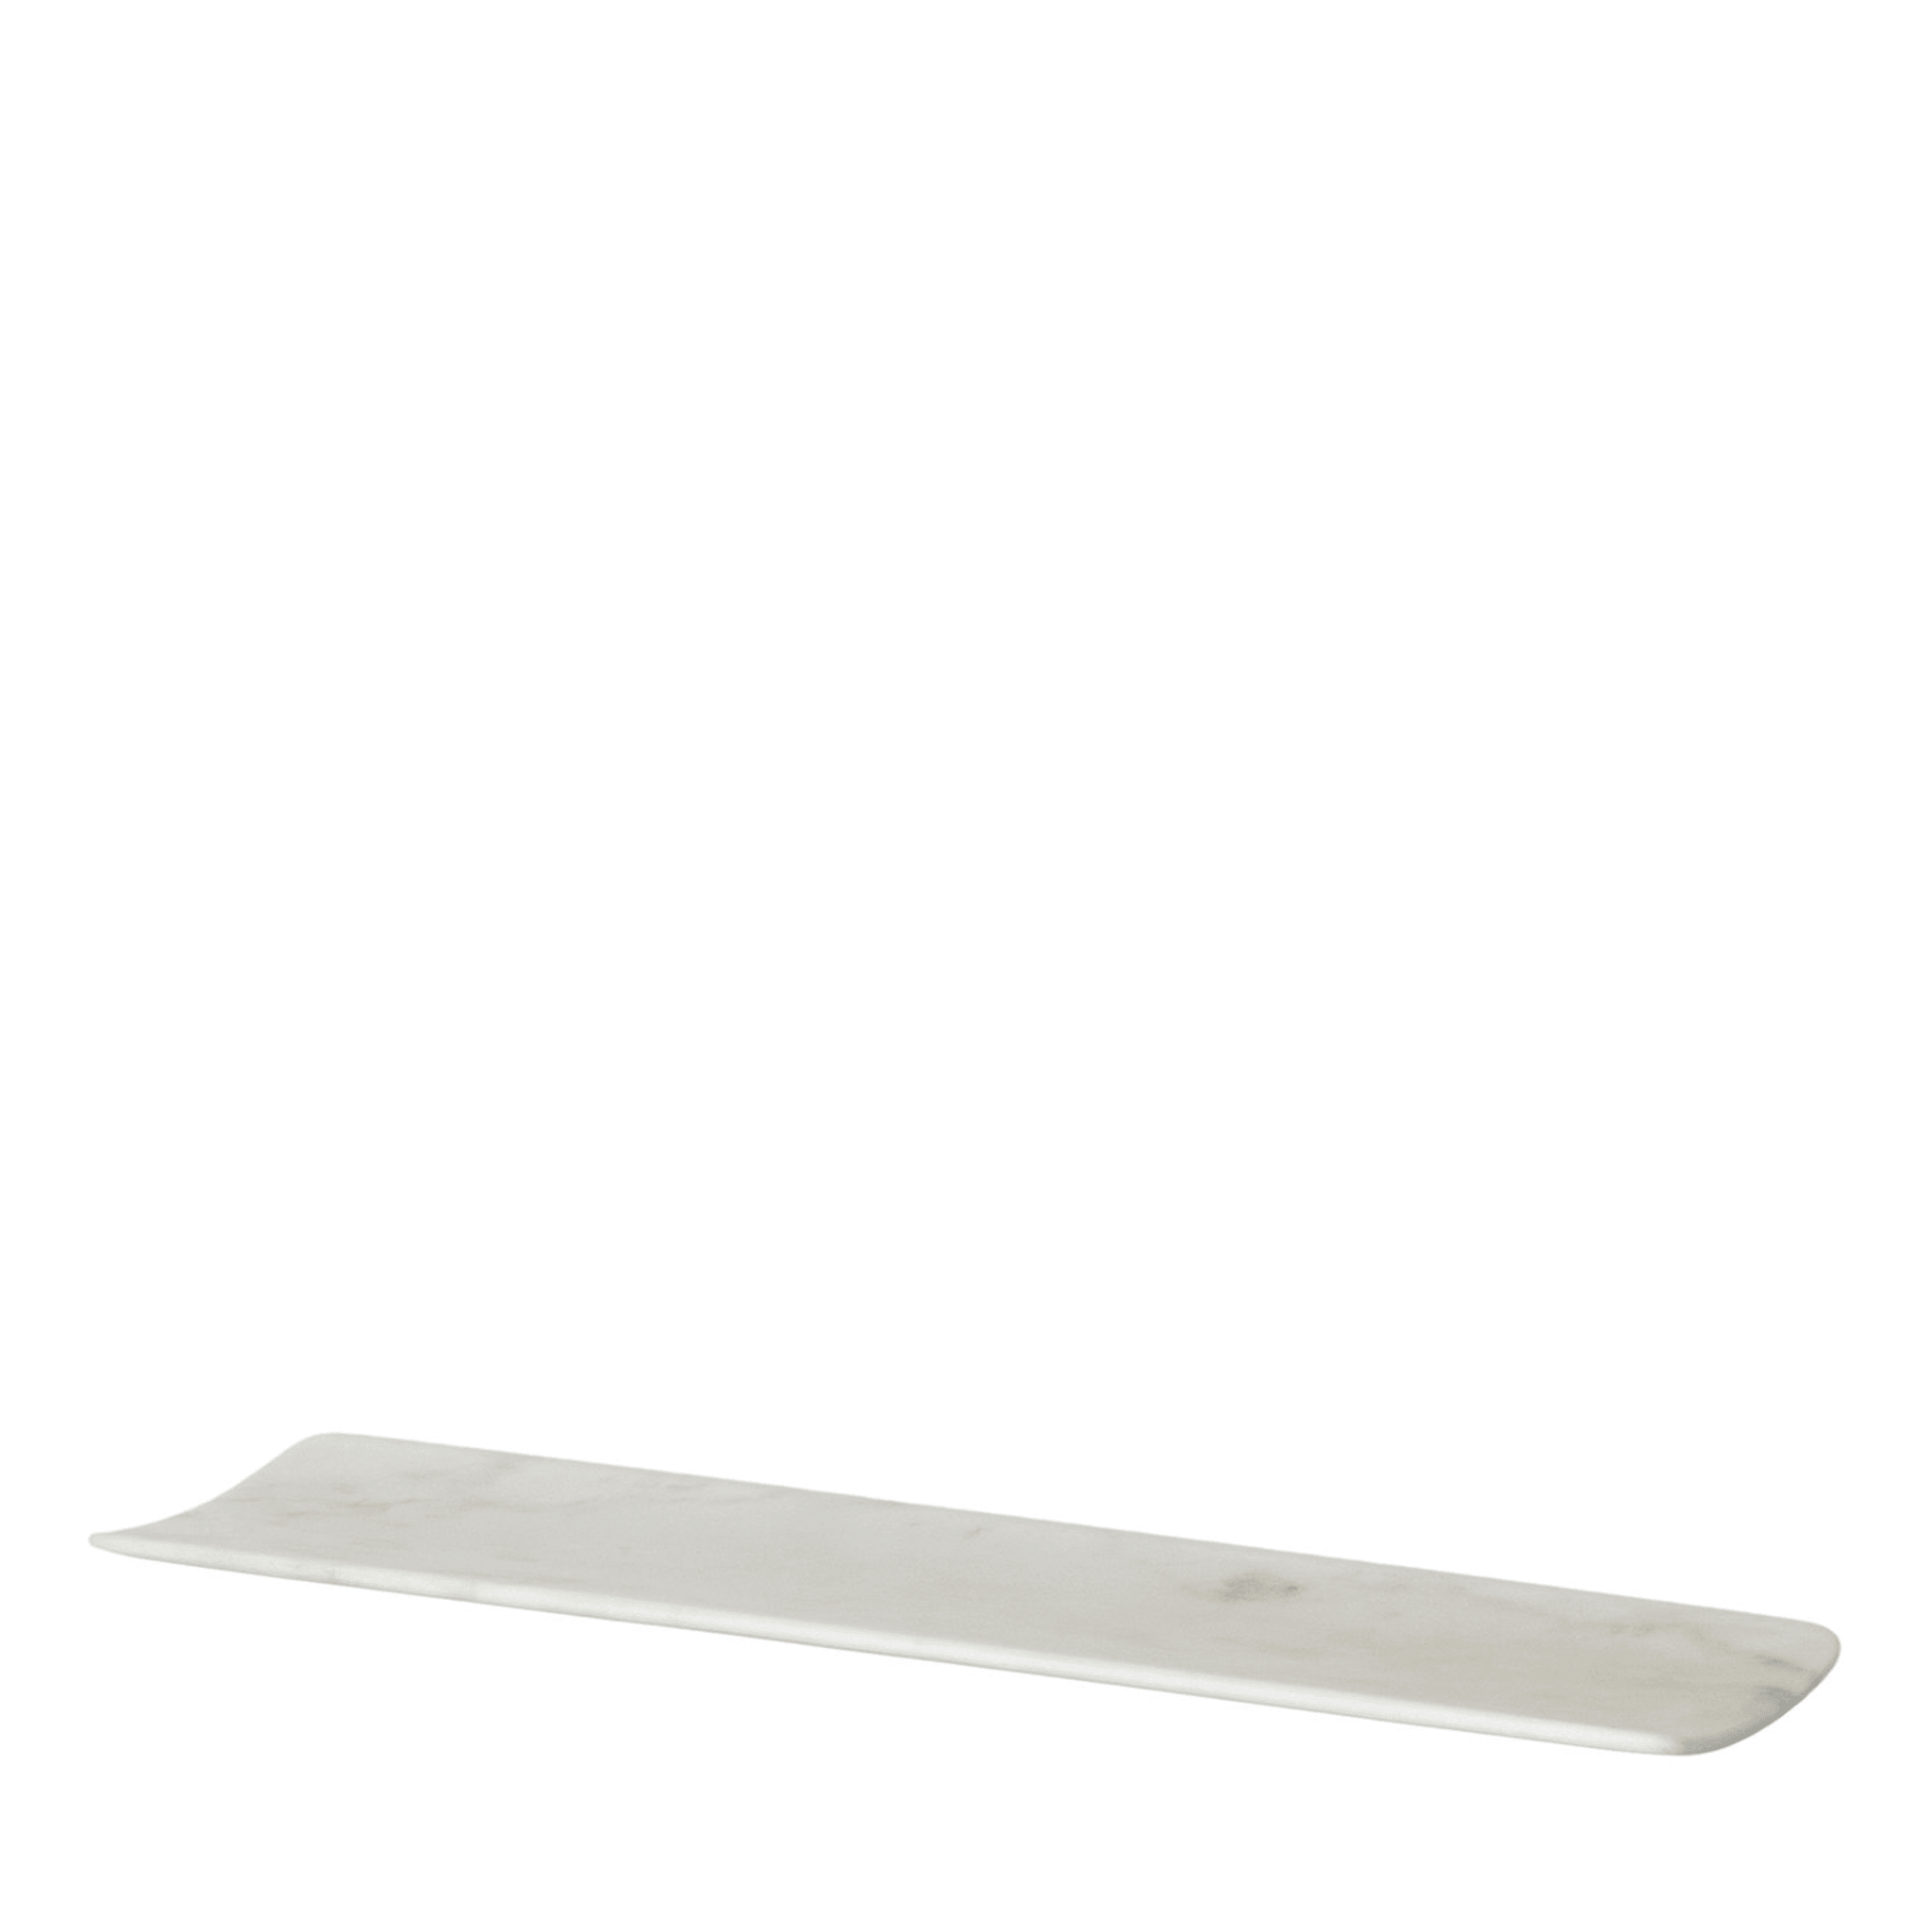 Curvato Medium White Carrara Tray by Studioformart - Main view